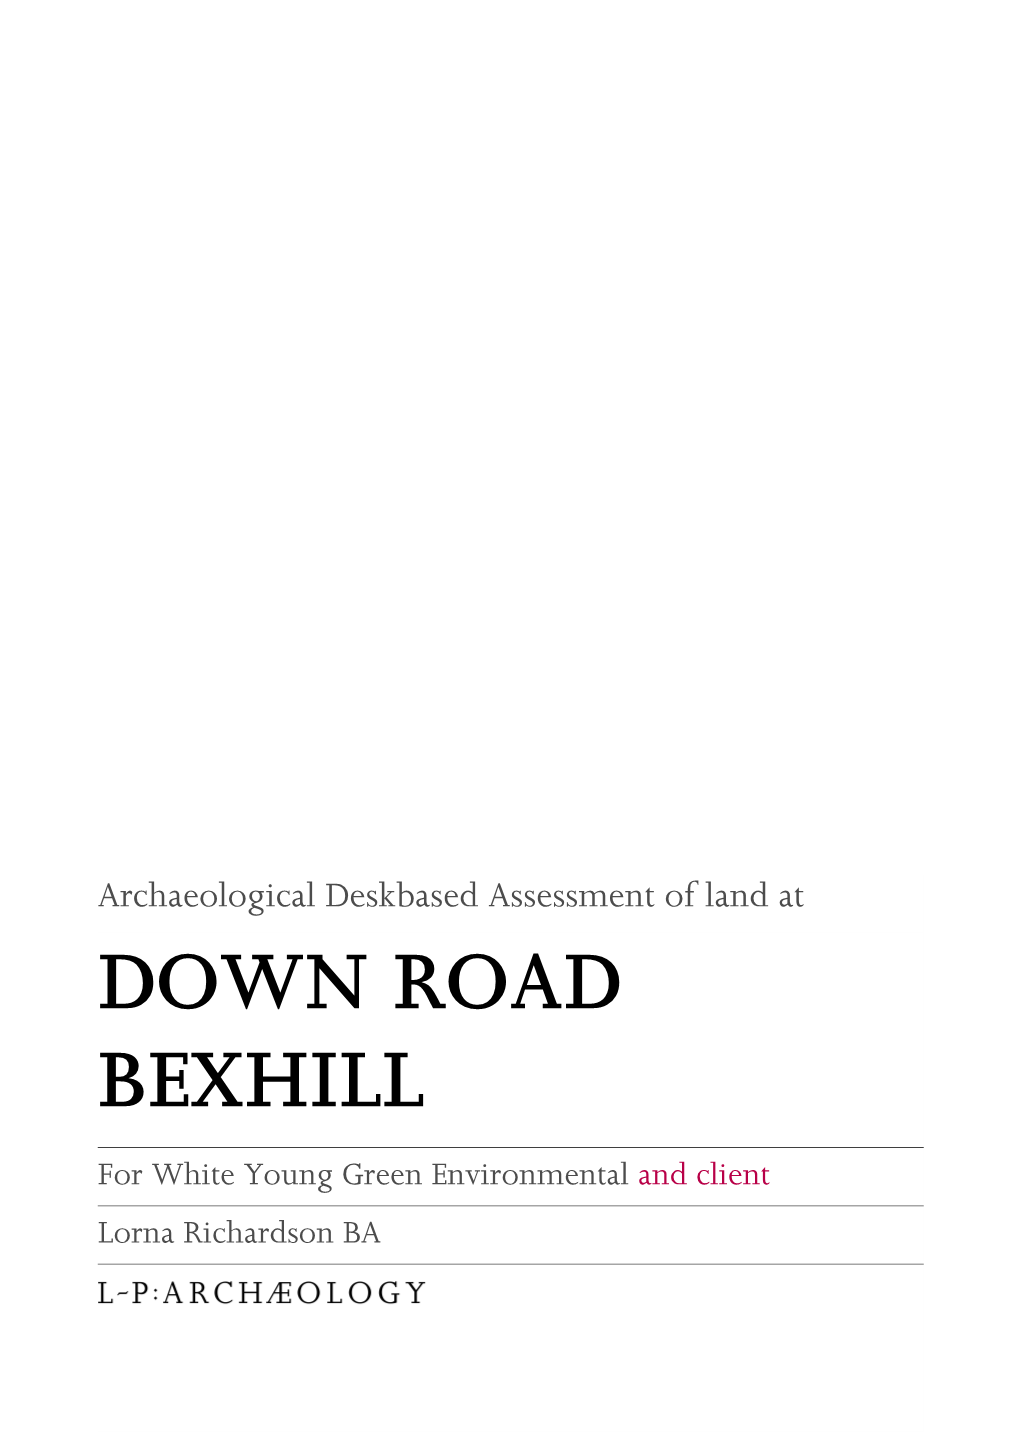 Archaeological Deskbased Assessment of Land At